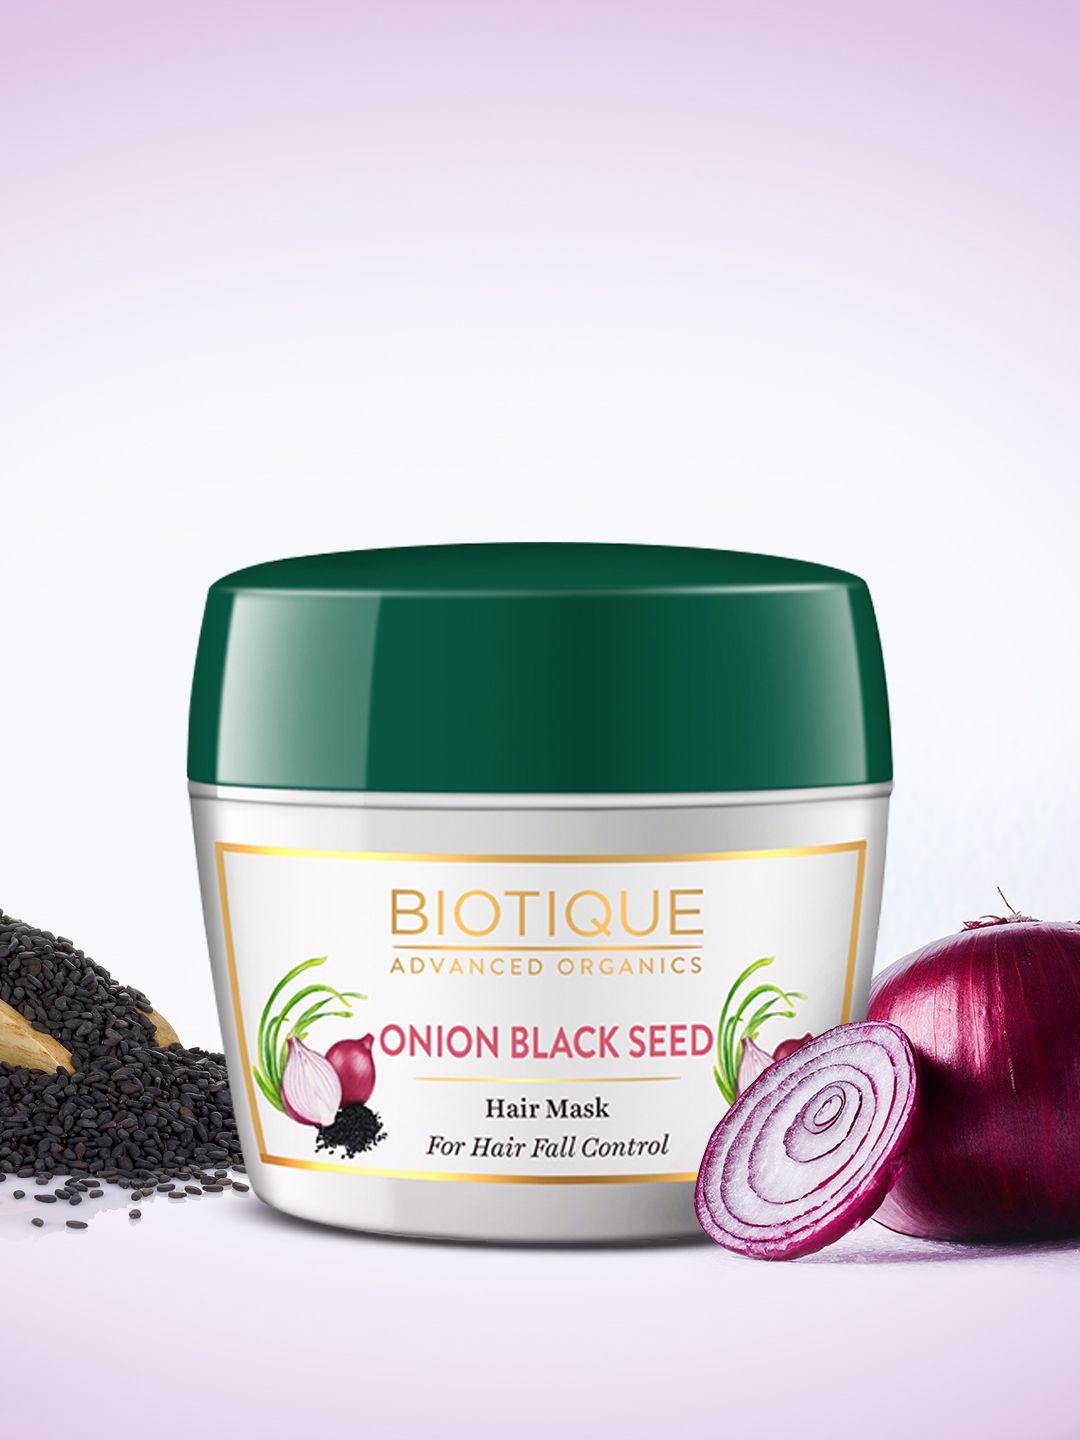 Biotique Advanced Organics Onion Black Seed Hair Mask 175 g Price in India